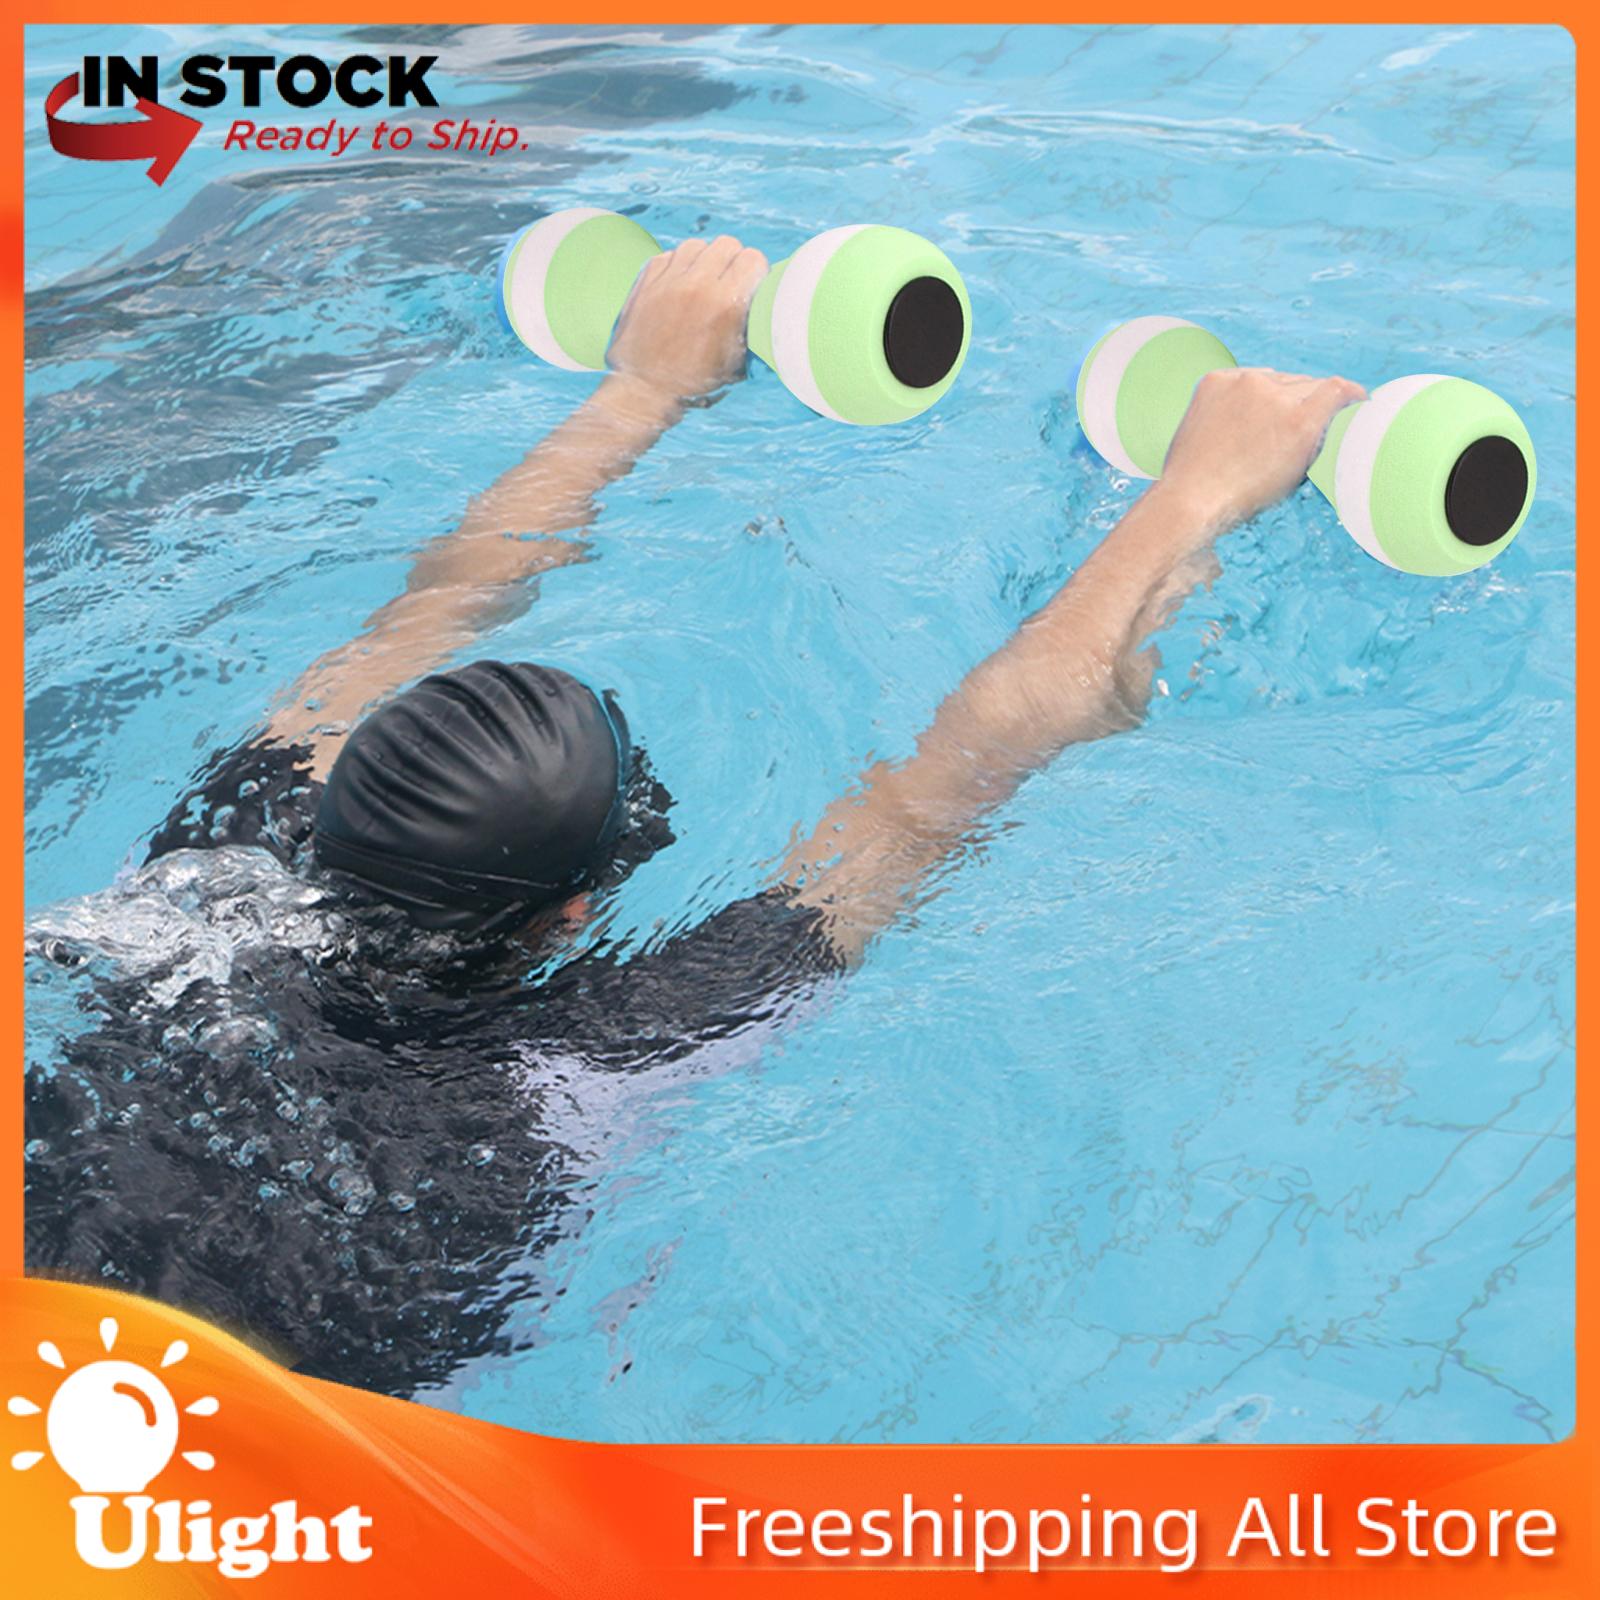 Ulight Aquatic Dumbells, Water Aerobic Exercise Dumbbell Pool Resistance